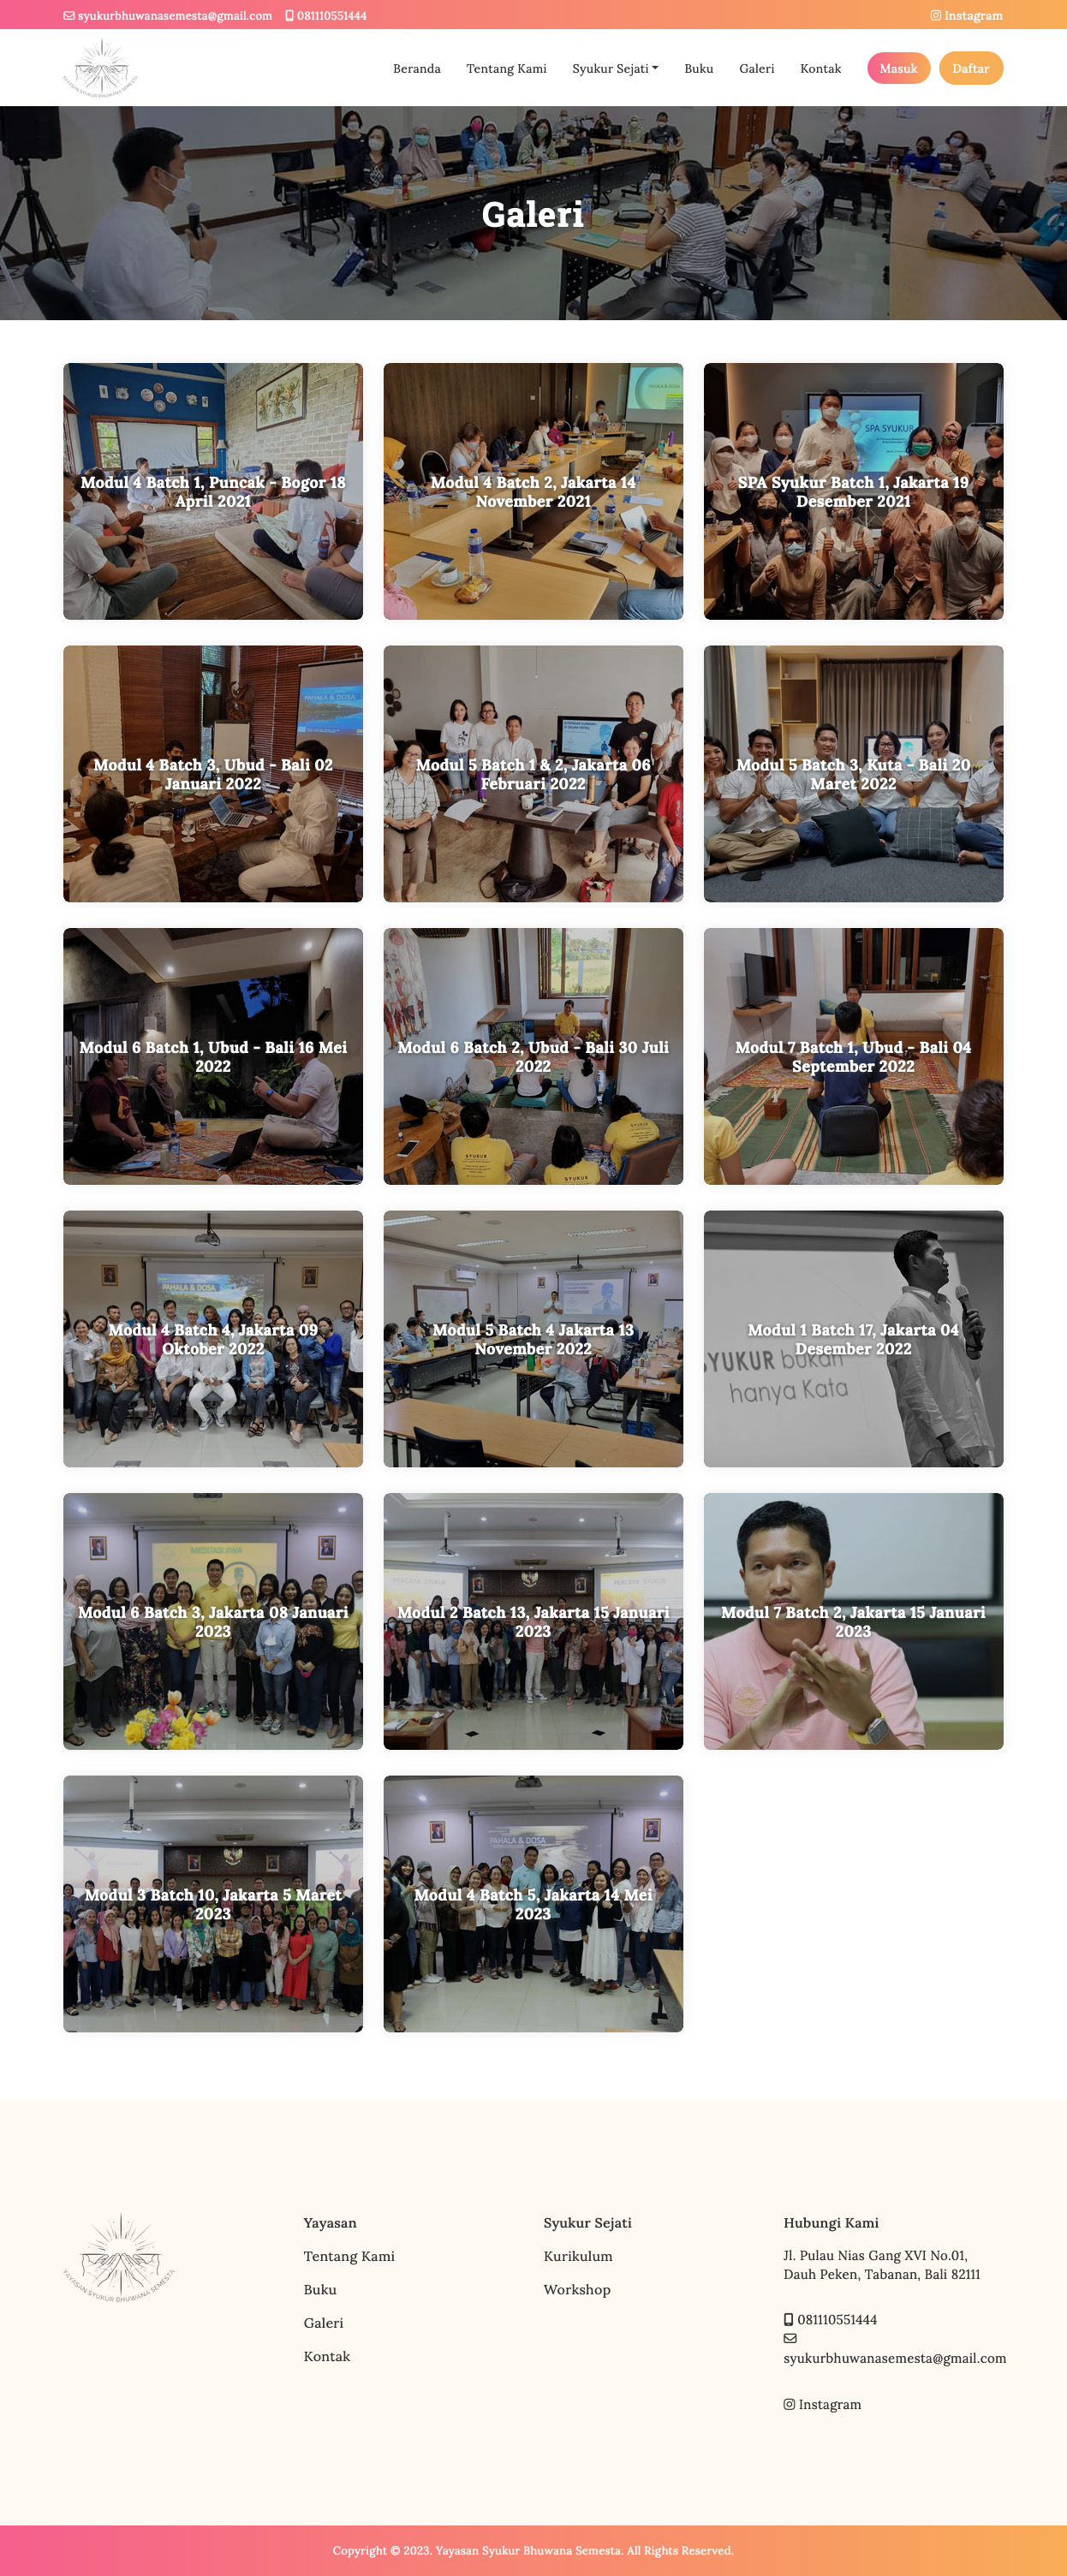 Online Course - Yayasan Syukur Bhuwana Semesta - Gallery - Galeri - Codenesia - Code Smart Play Hard